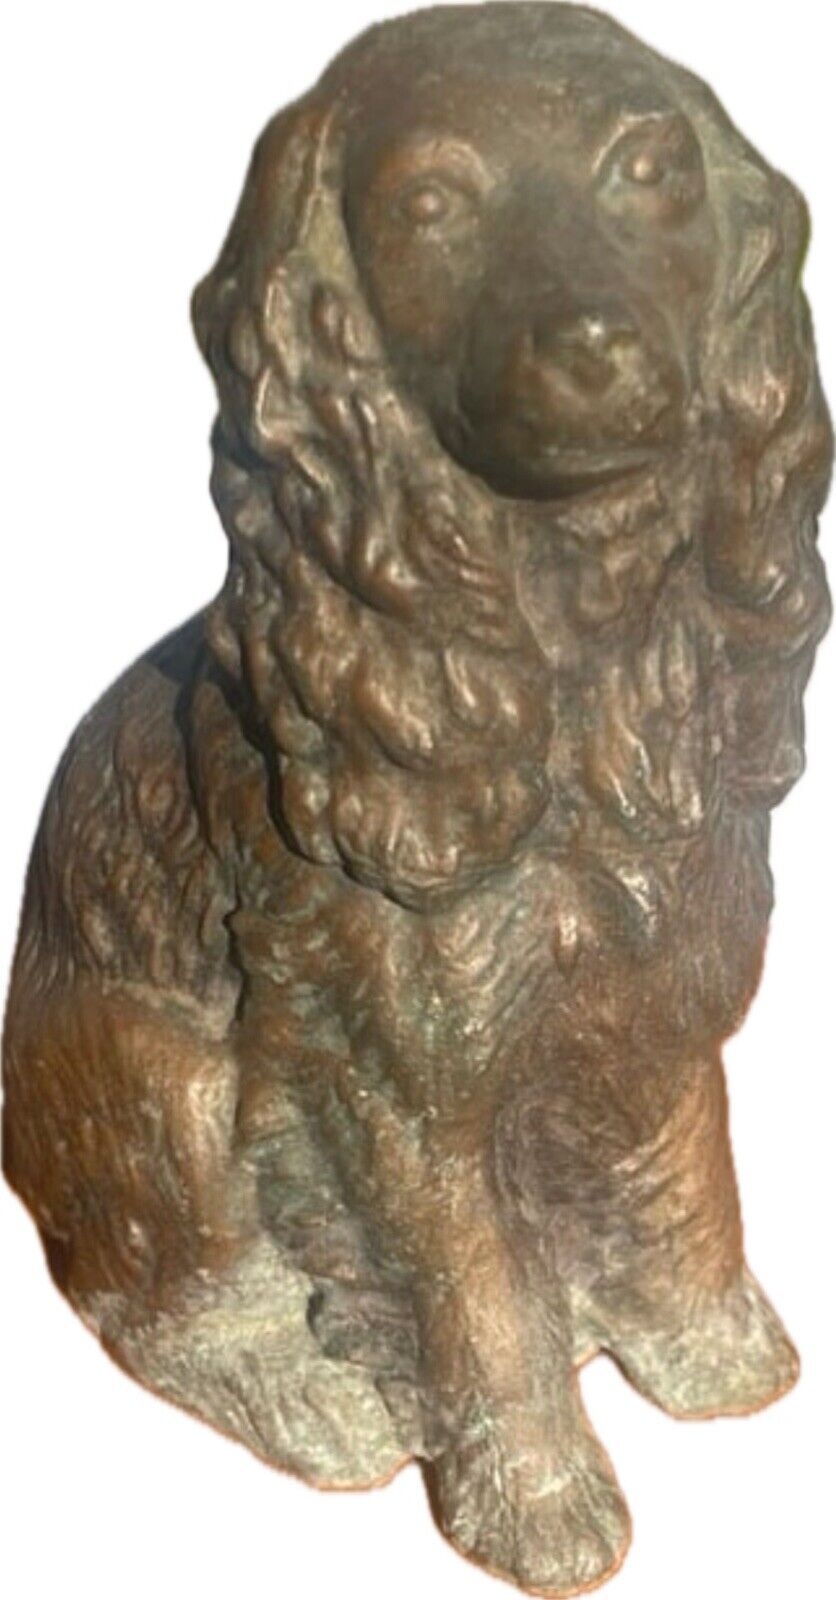 Vintage Cast Lead- Metal Cocker Spaniel Figurine - Dog Statue